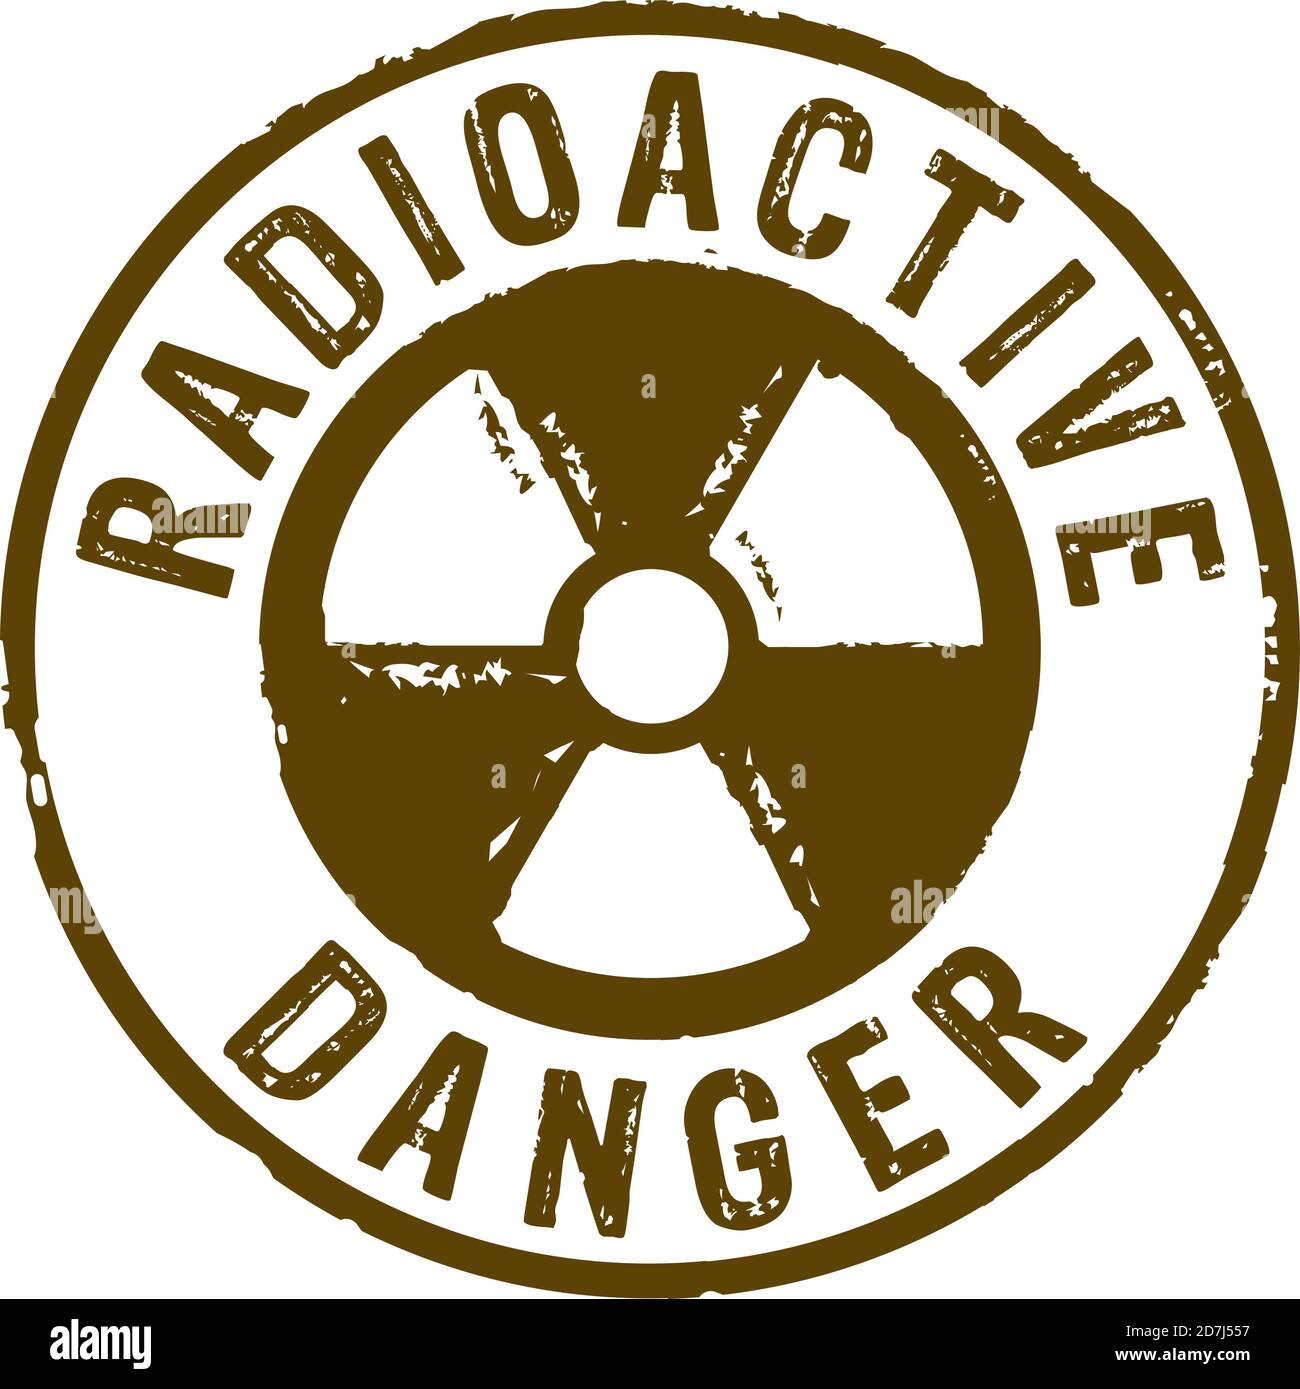 Radioactive danger symbol grunge stamp vector symbol. Atomic energy warning, radiation alert and nuclear power hazard concept illustration. Stock Vector